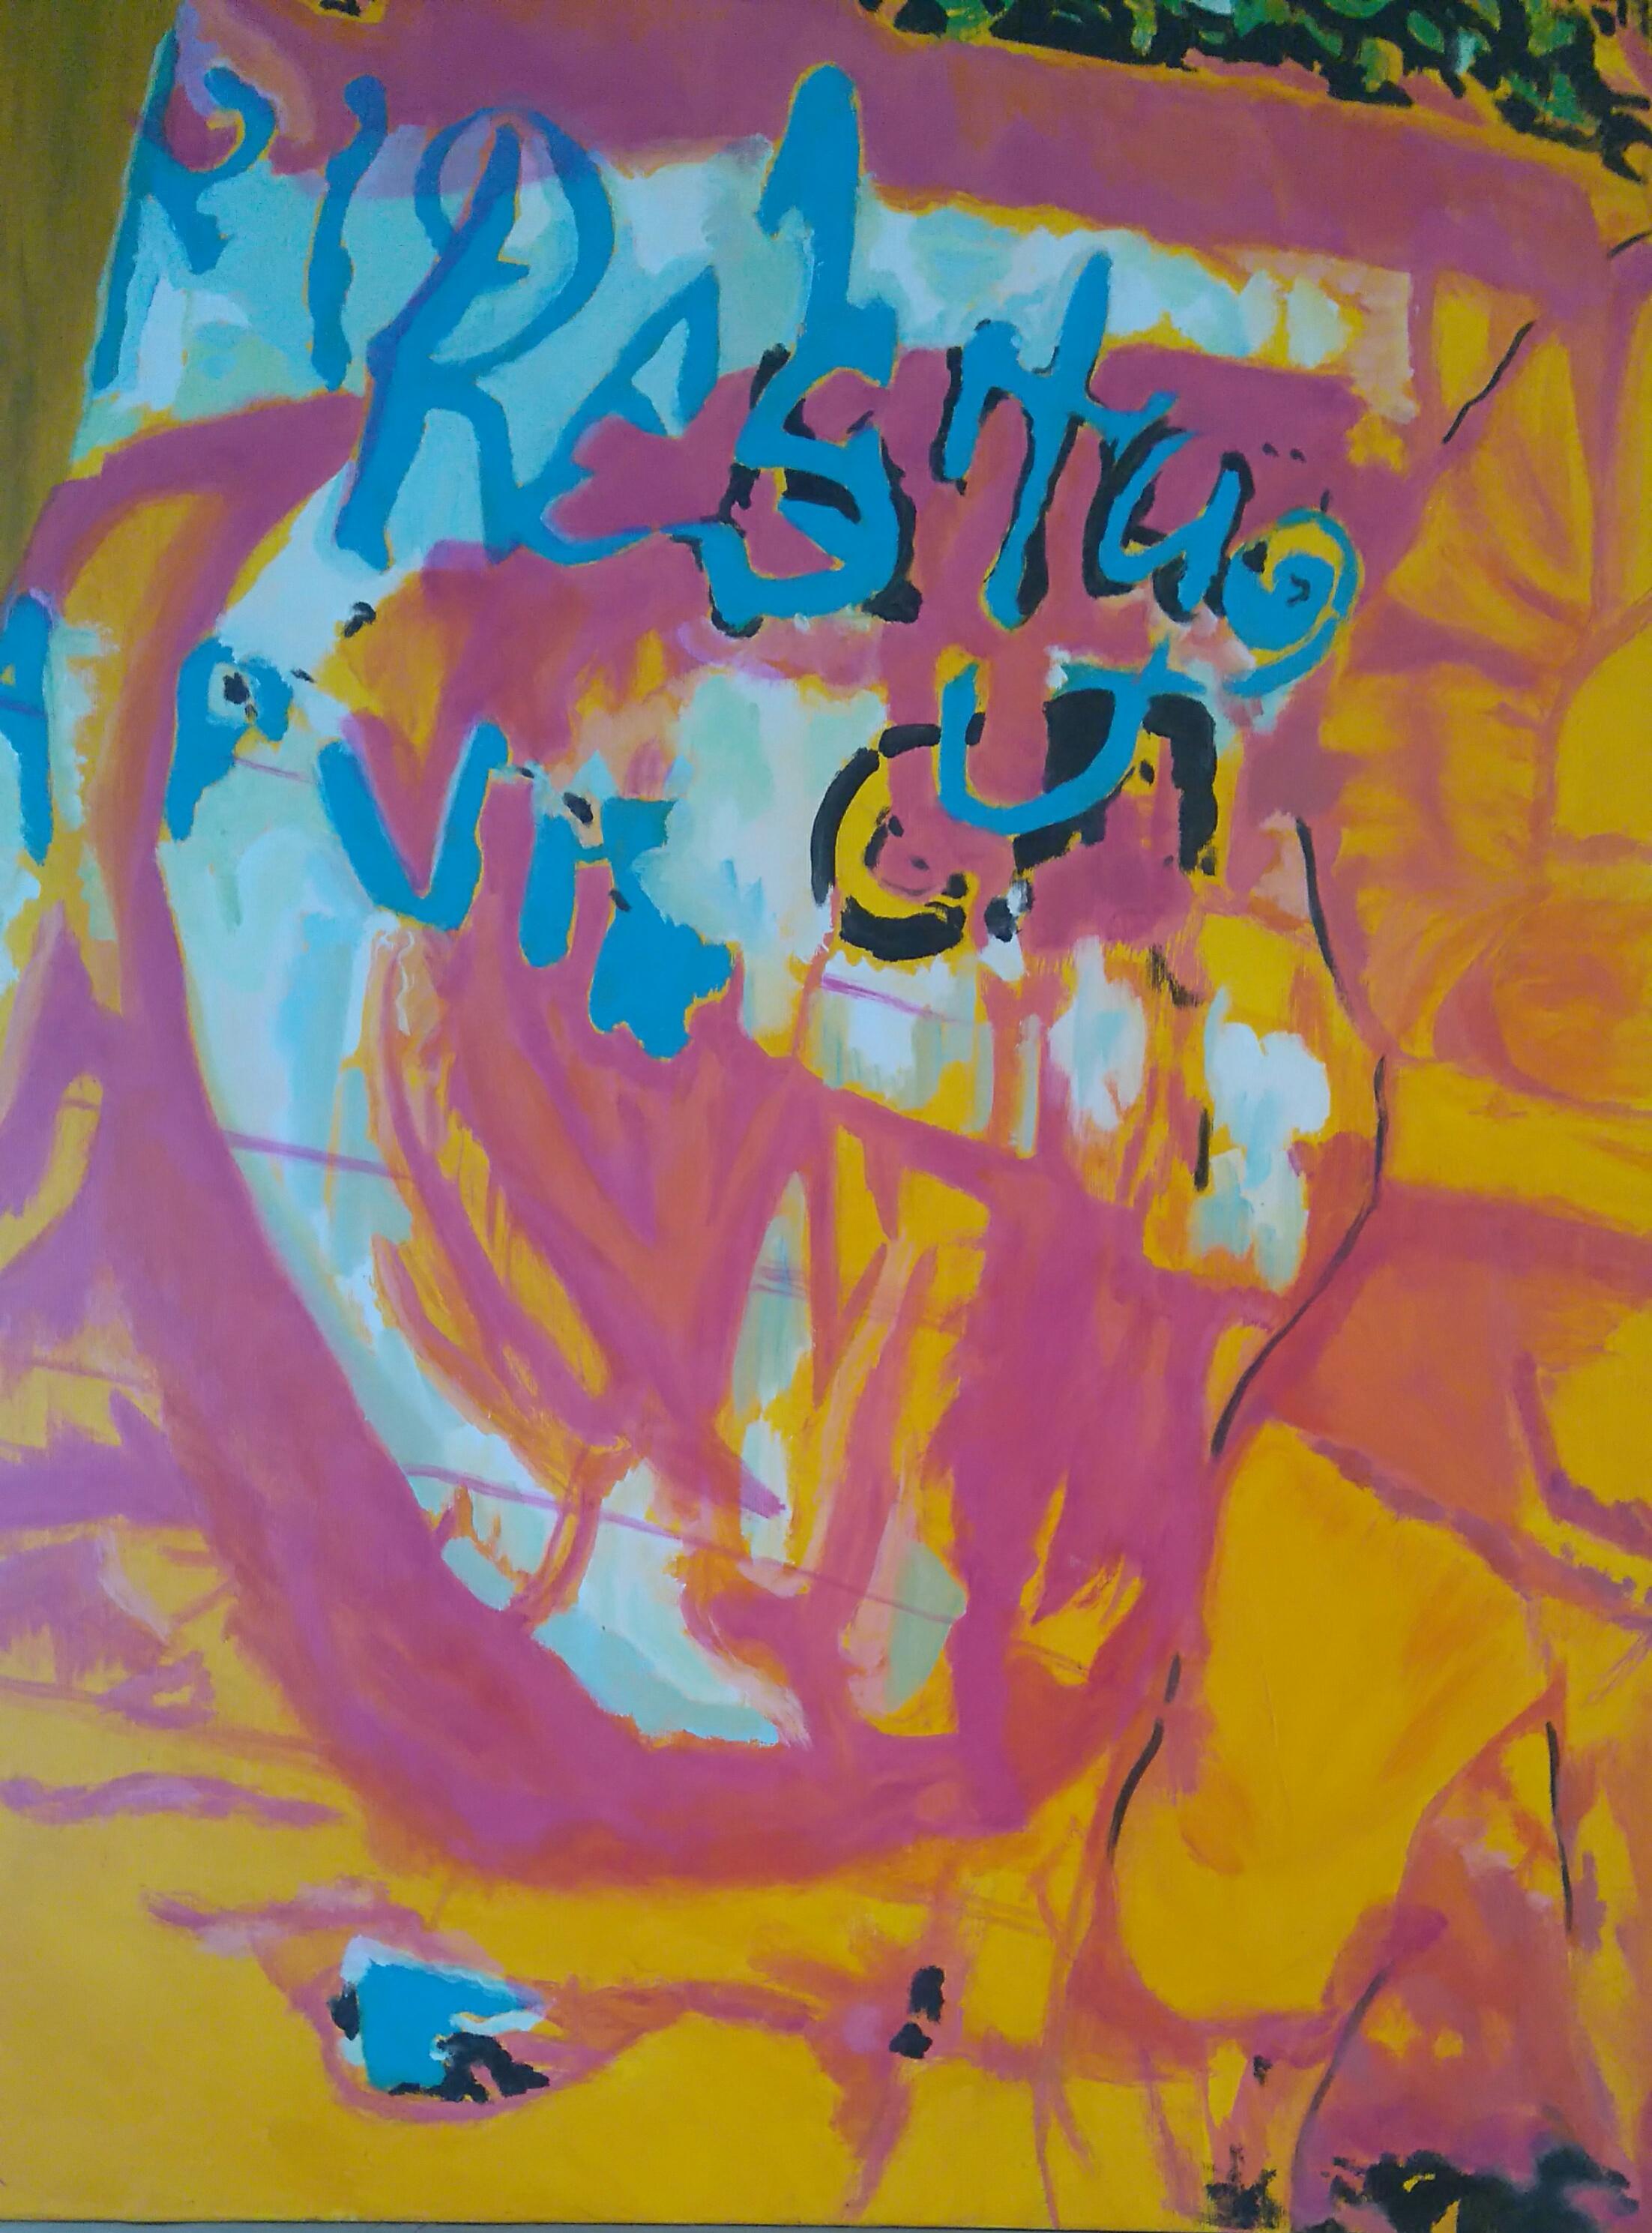 Abstract Painting Brigitte Mathé -  Art contemporain français par Brigitte Math - Graffitis